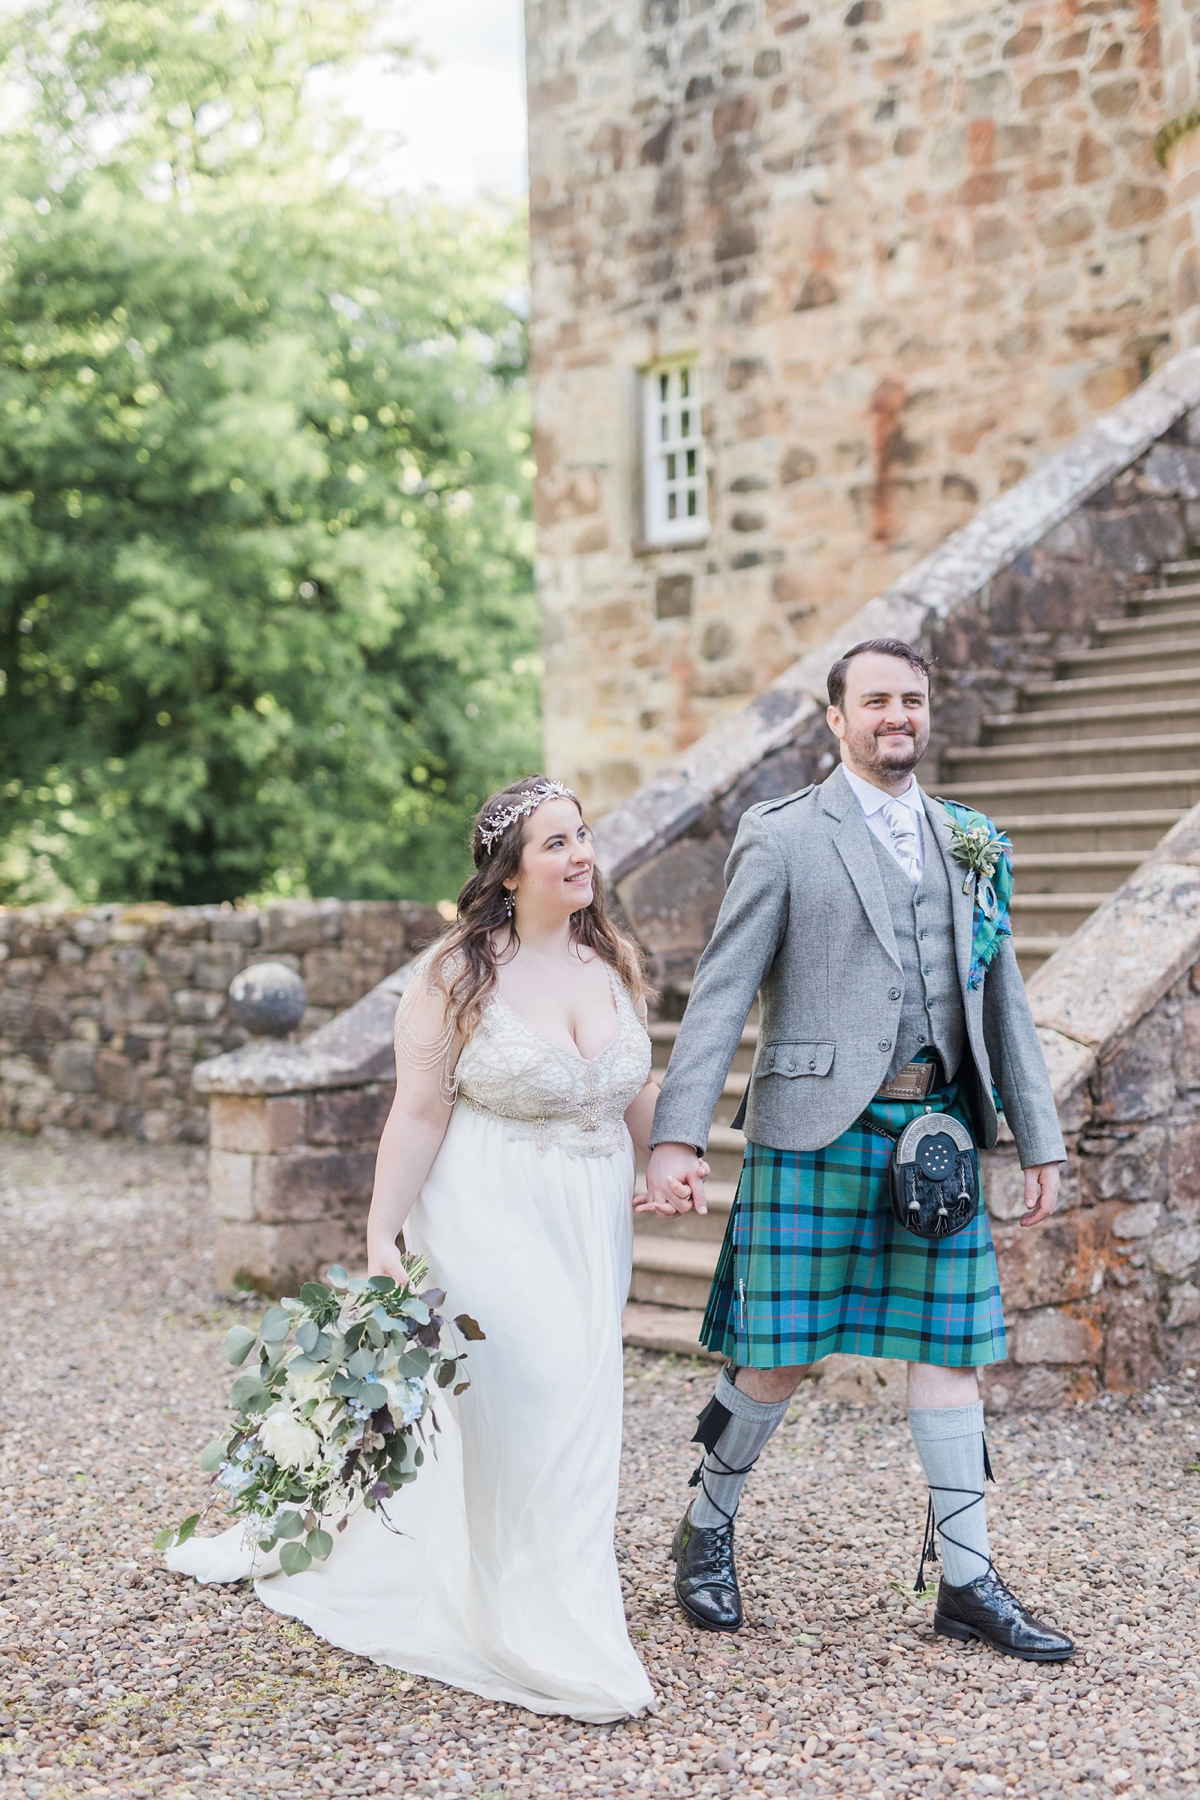 Anna Campell dress Scottish handfasting wedding 36